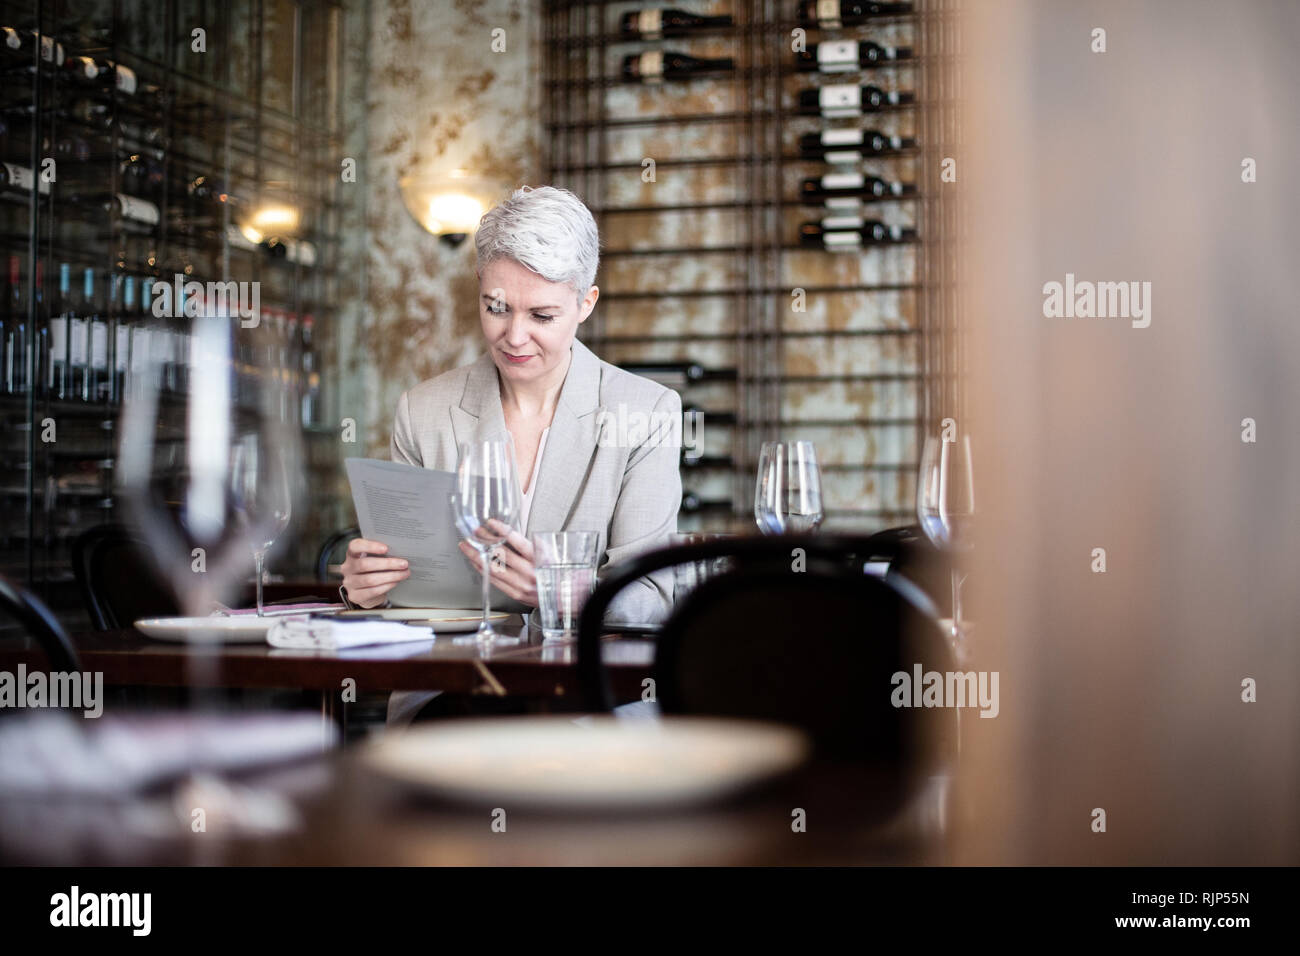 Businesswoman reading menu in a restaurant Stock Photo